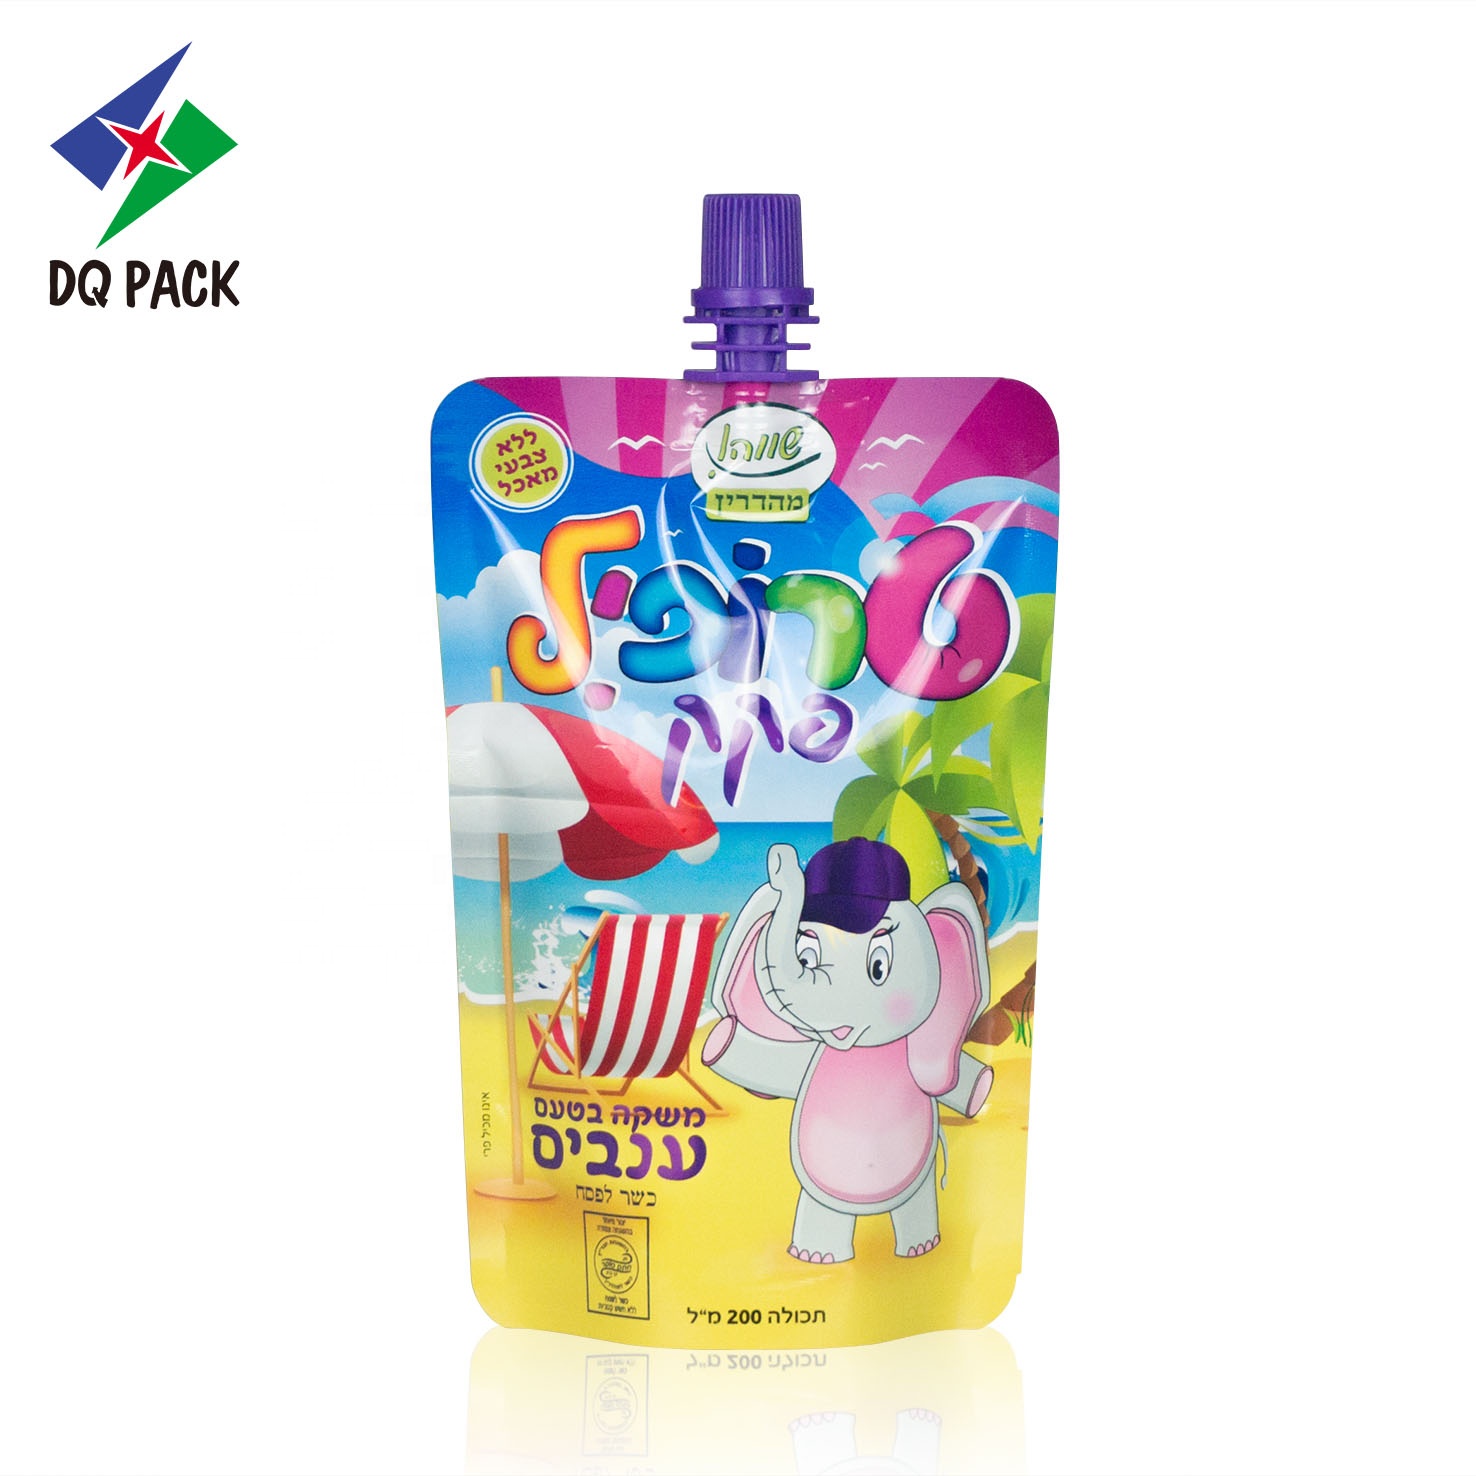 DQ PACK New Beverage Drink 200ml Juice Spout Pouch Wholesale